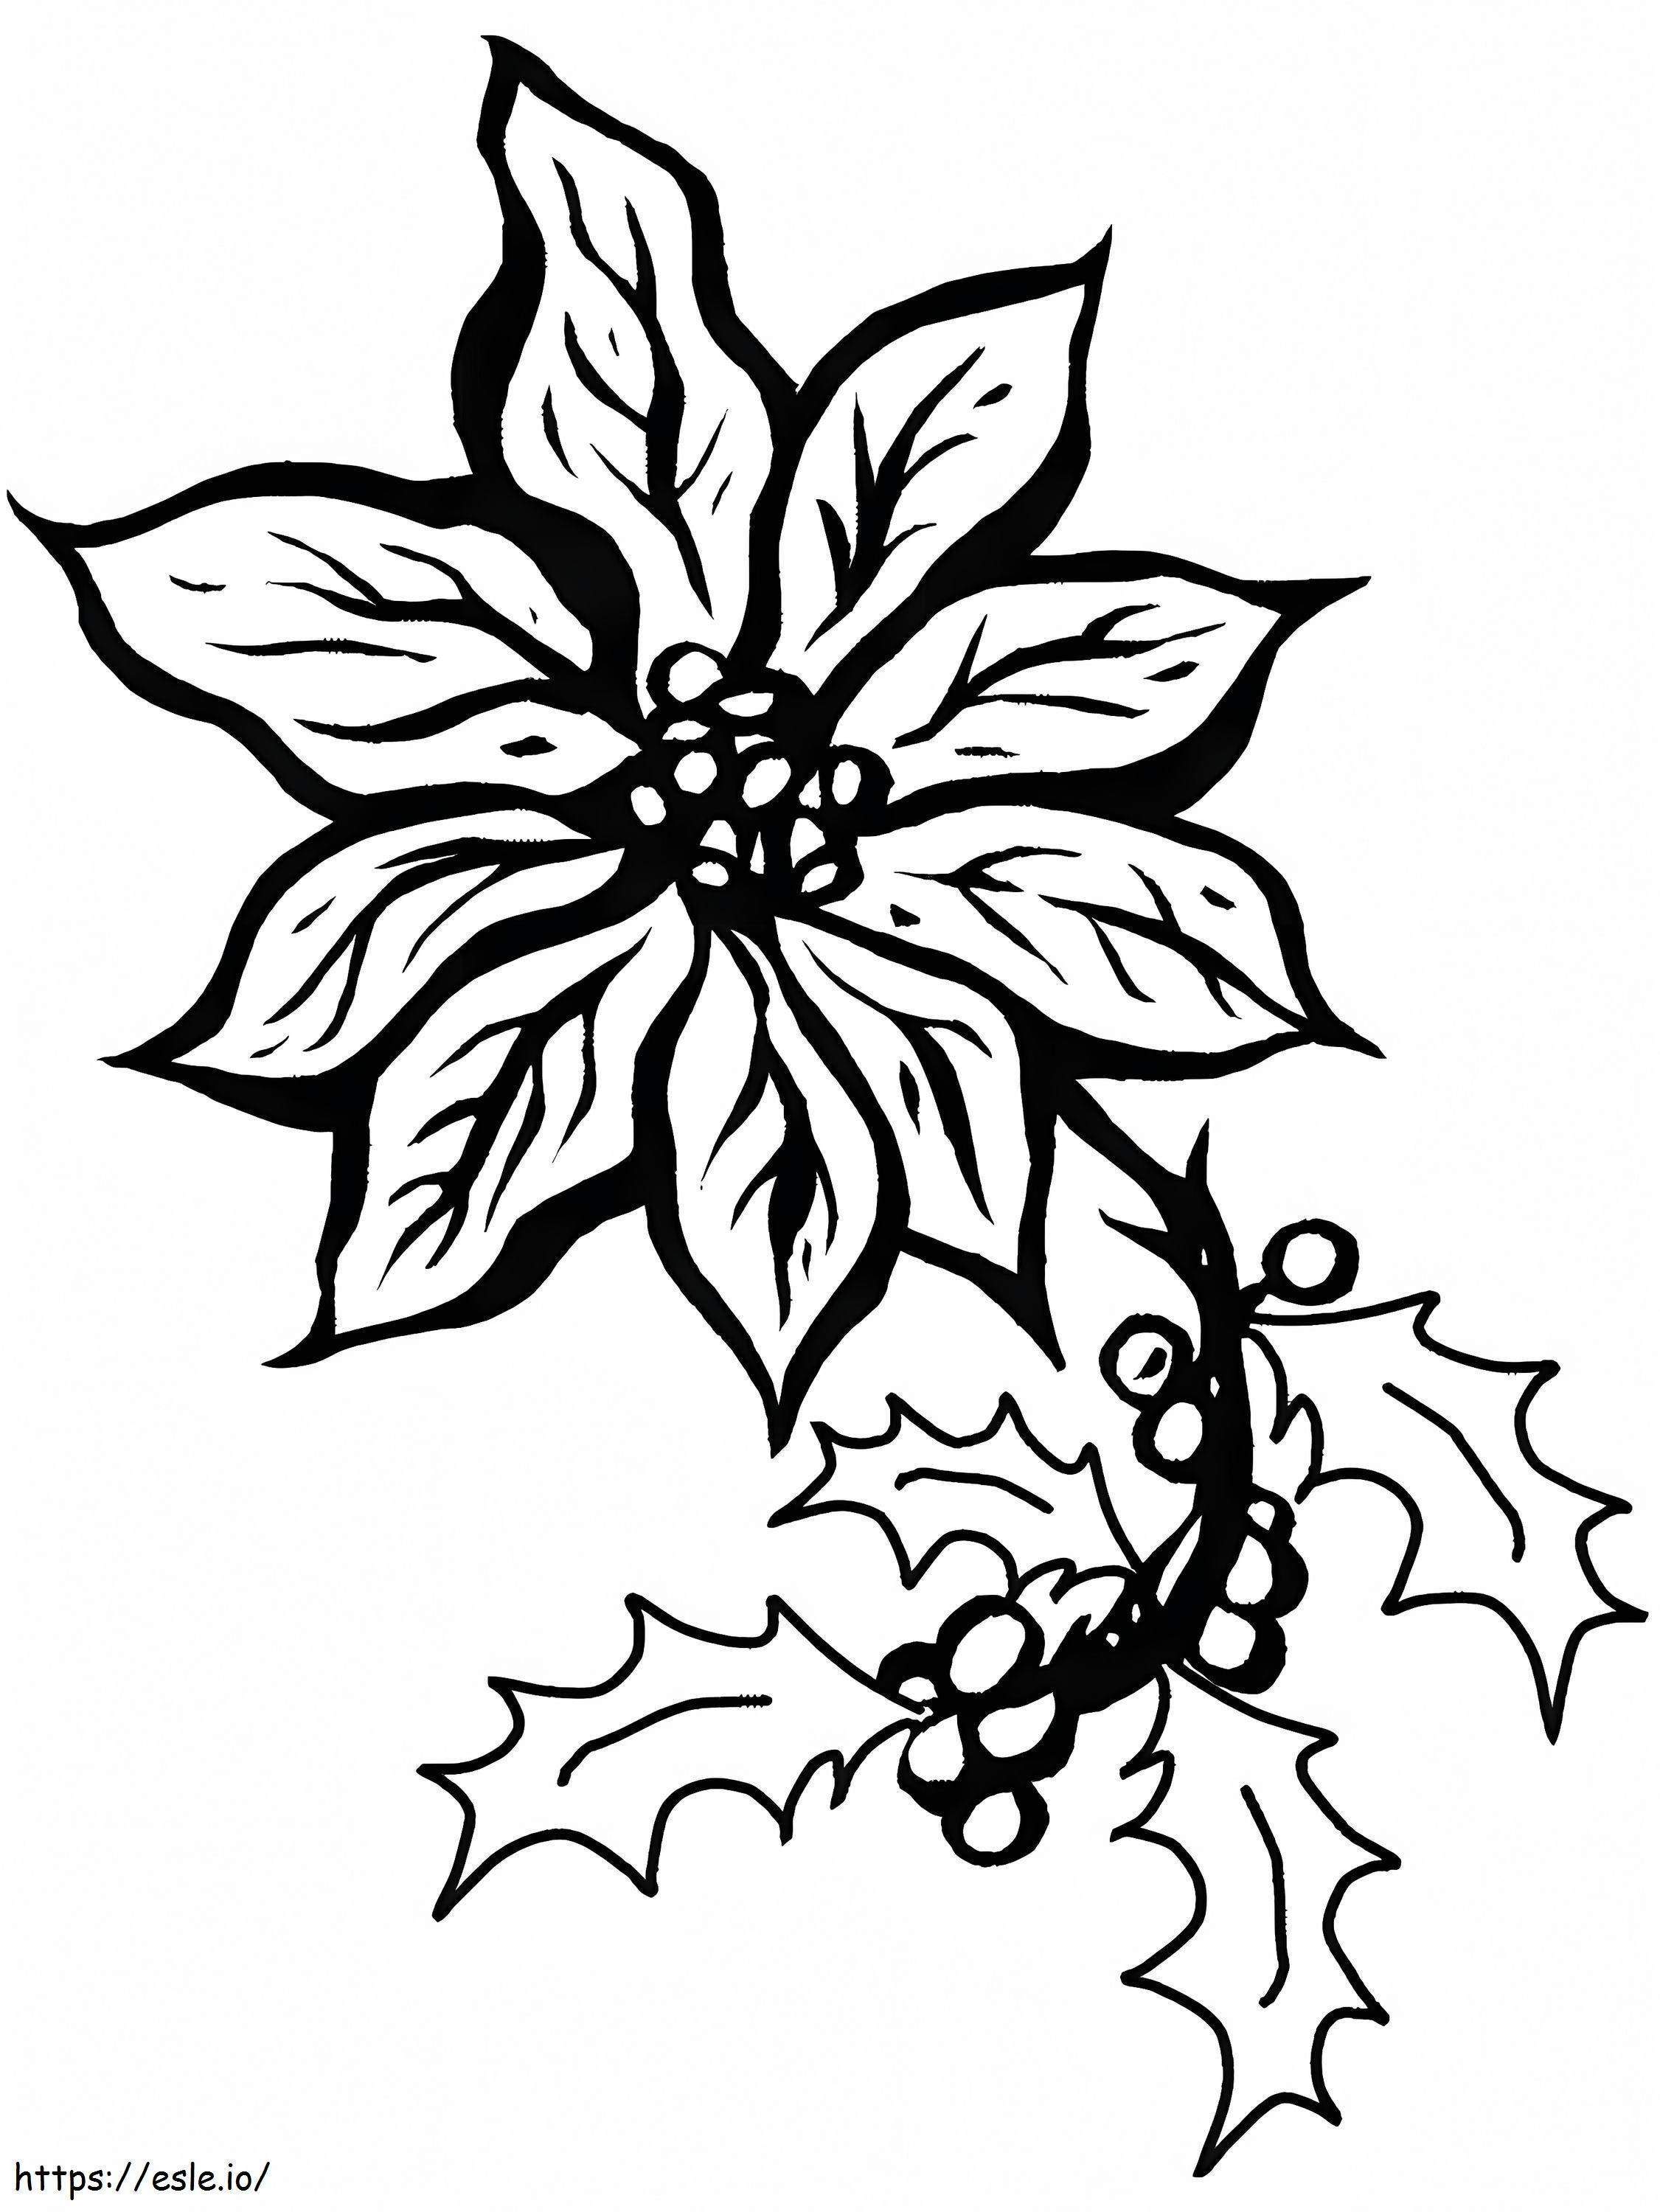 Coloriage  Poinsettia5A4 à imprimer dessin